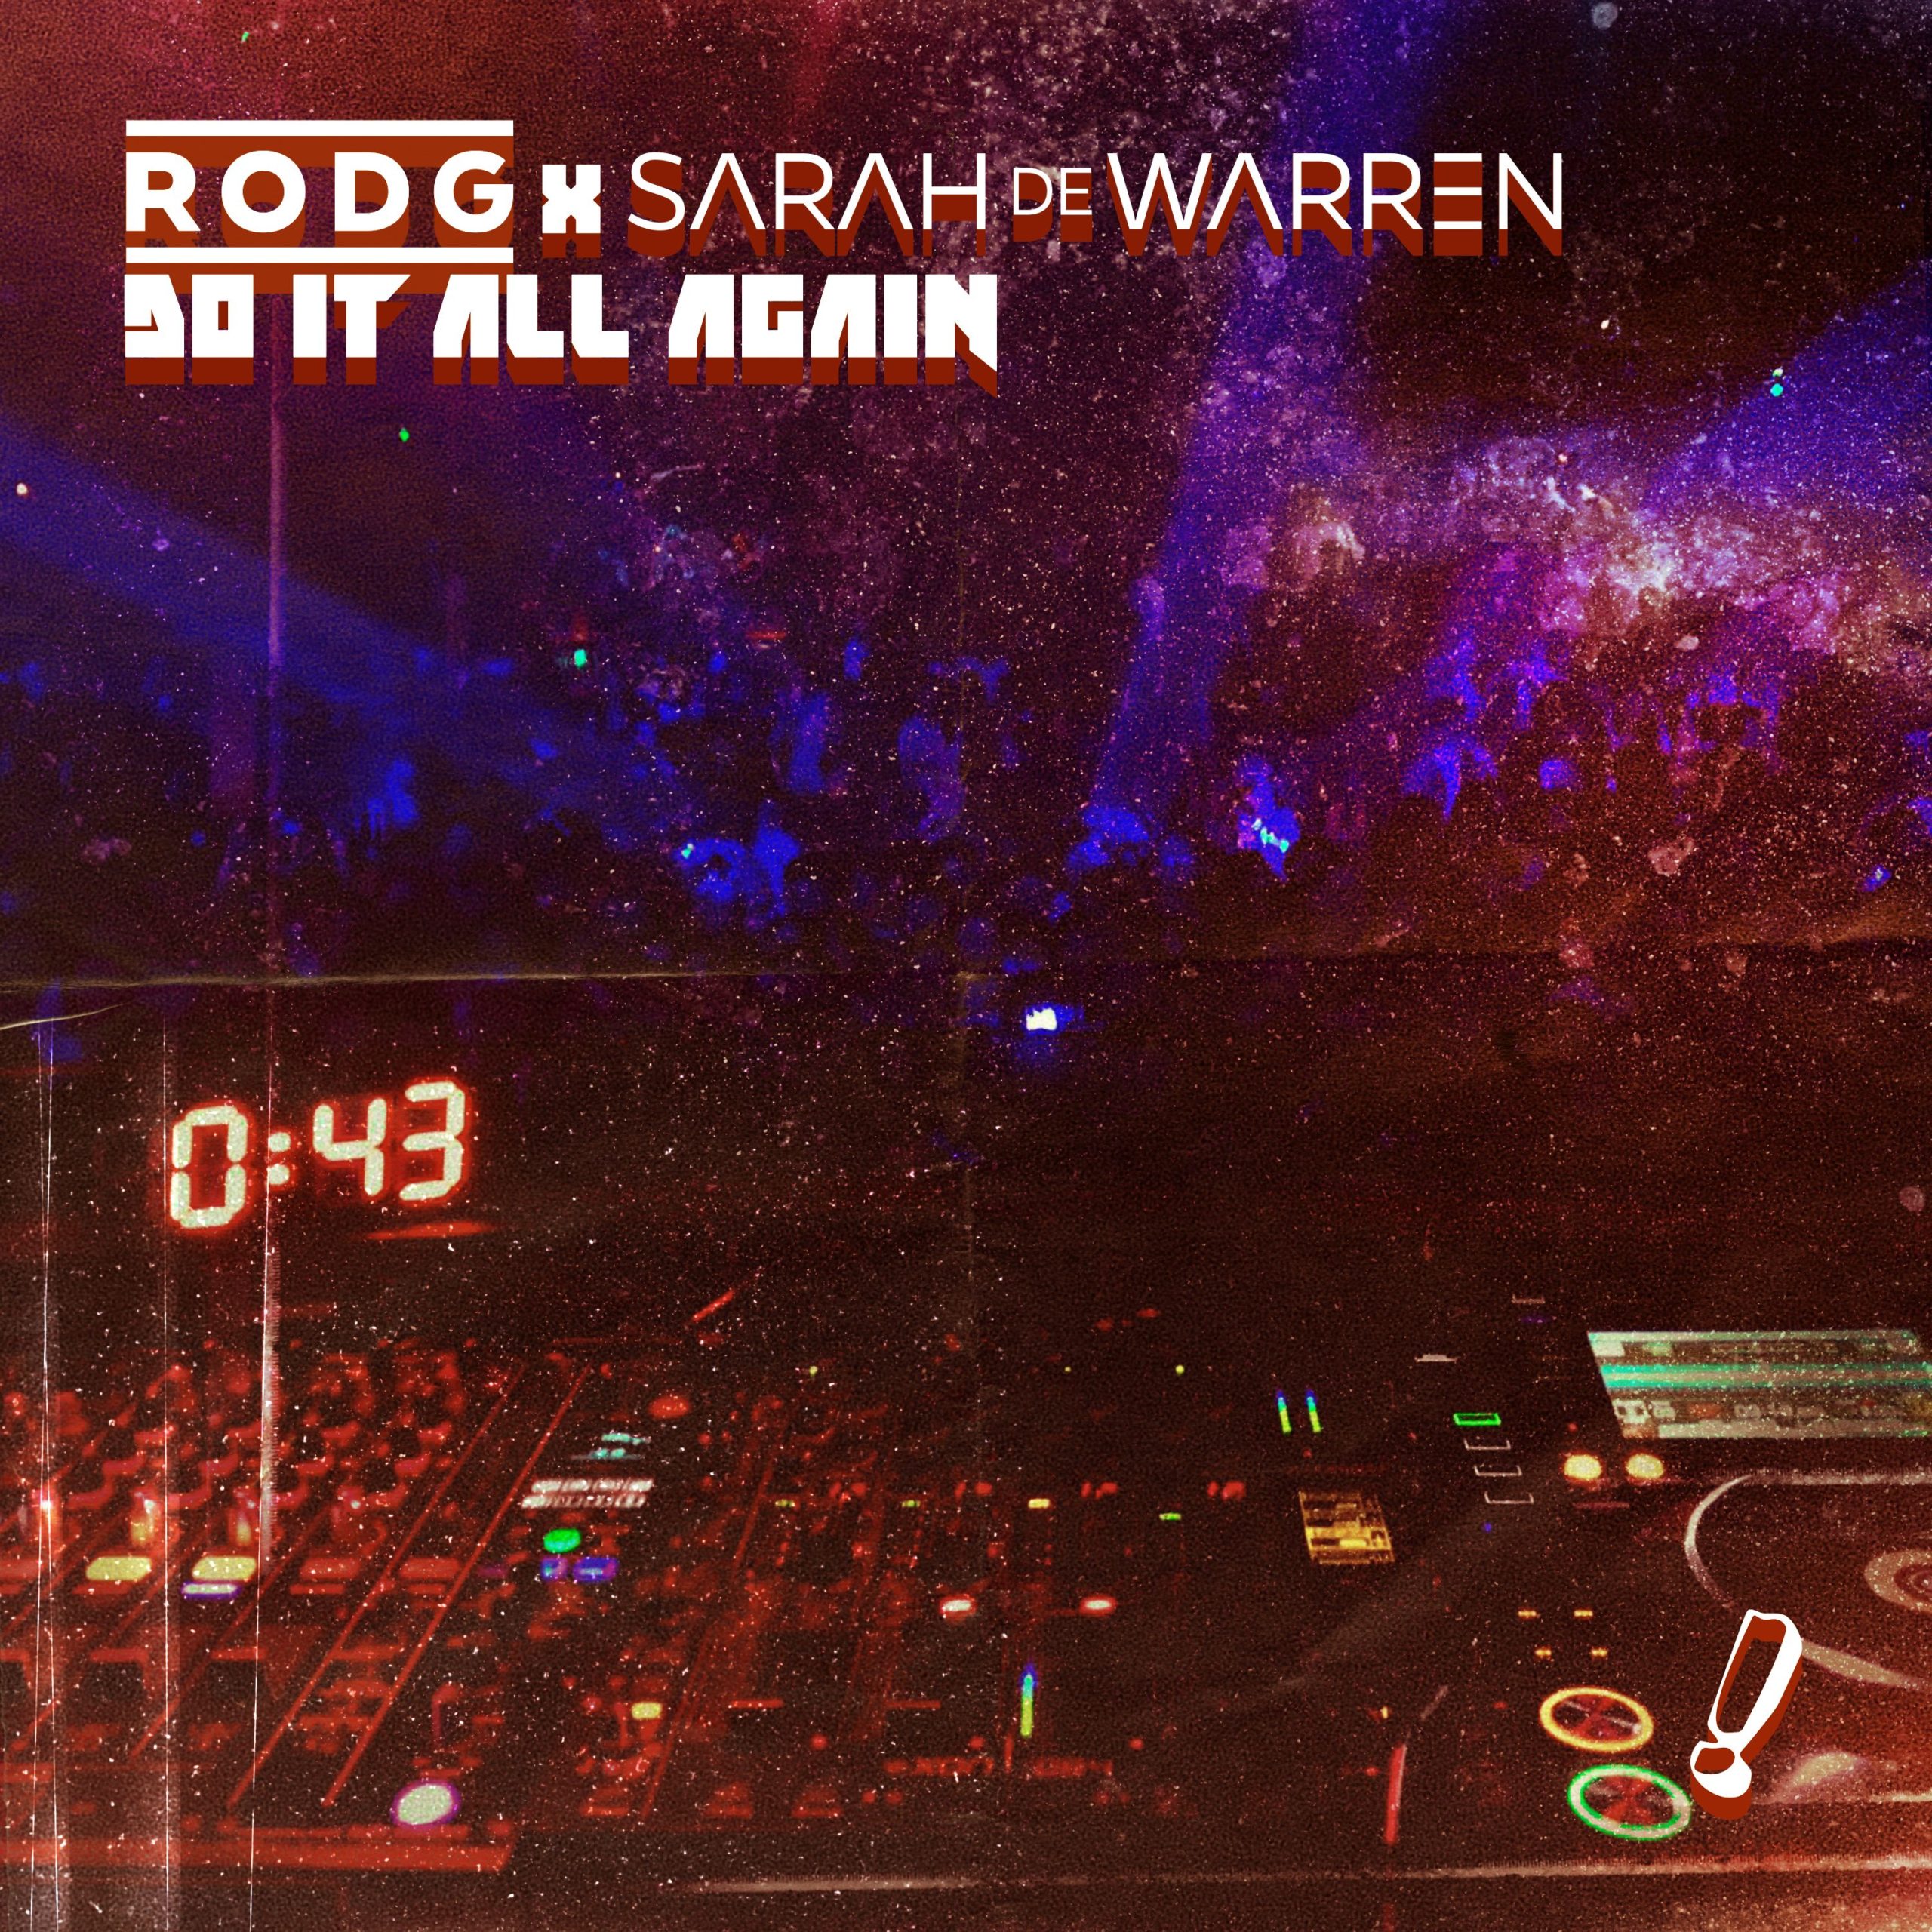 Rodg x Sarah de Warren presents Do It All Again on Statement!